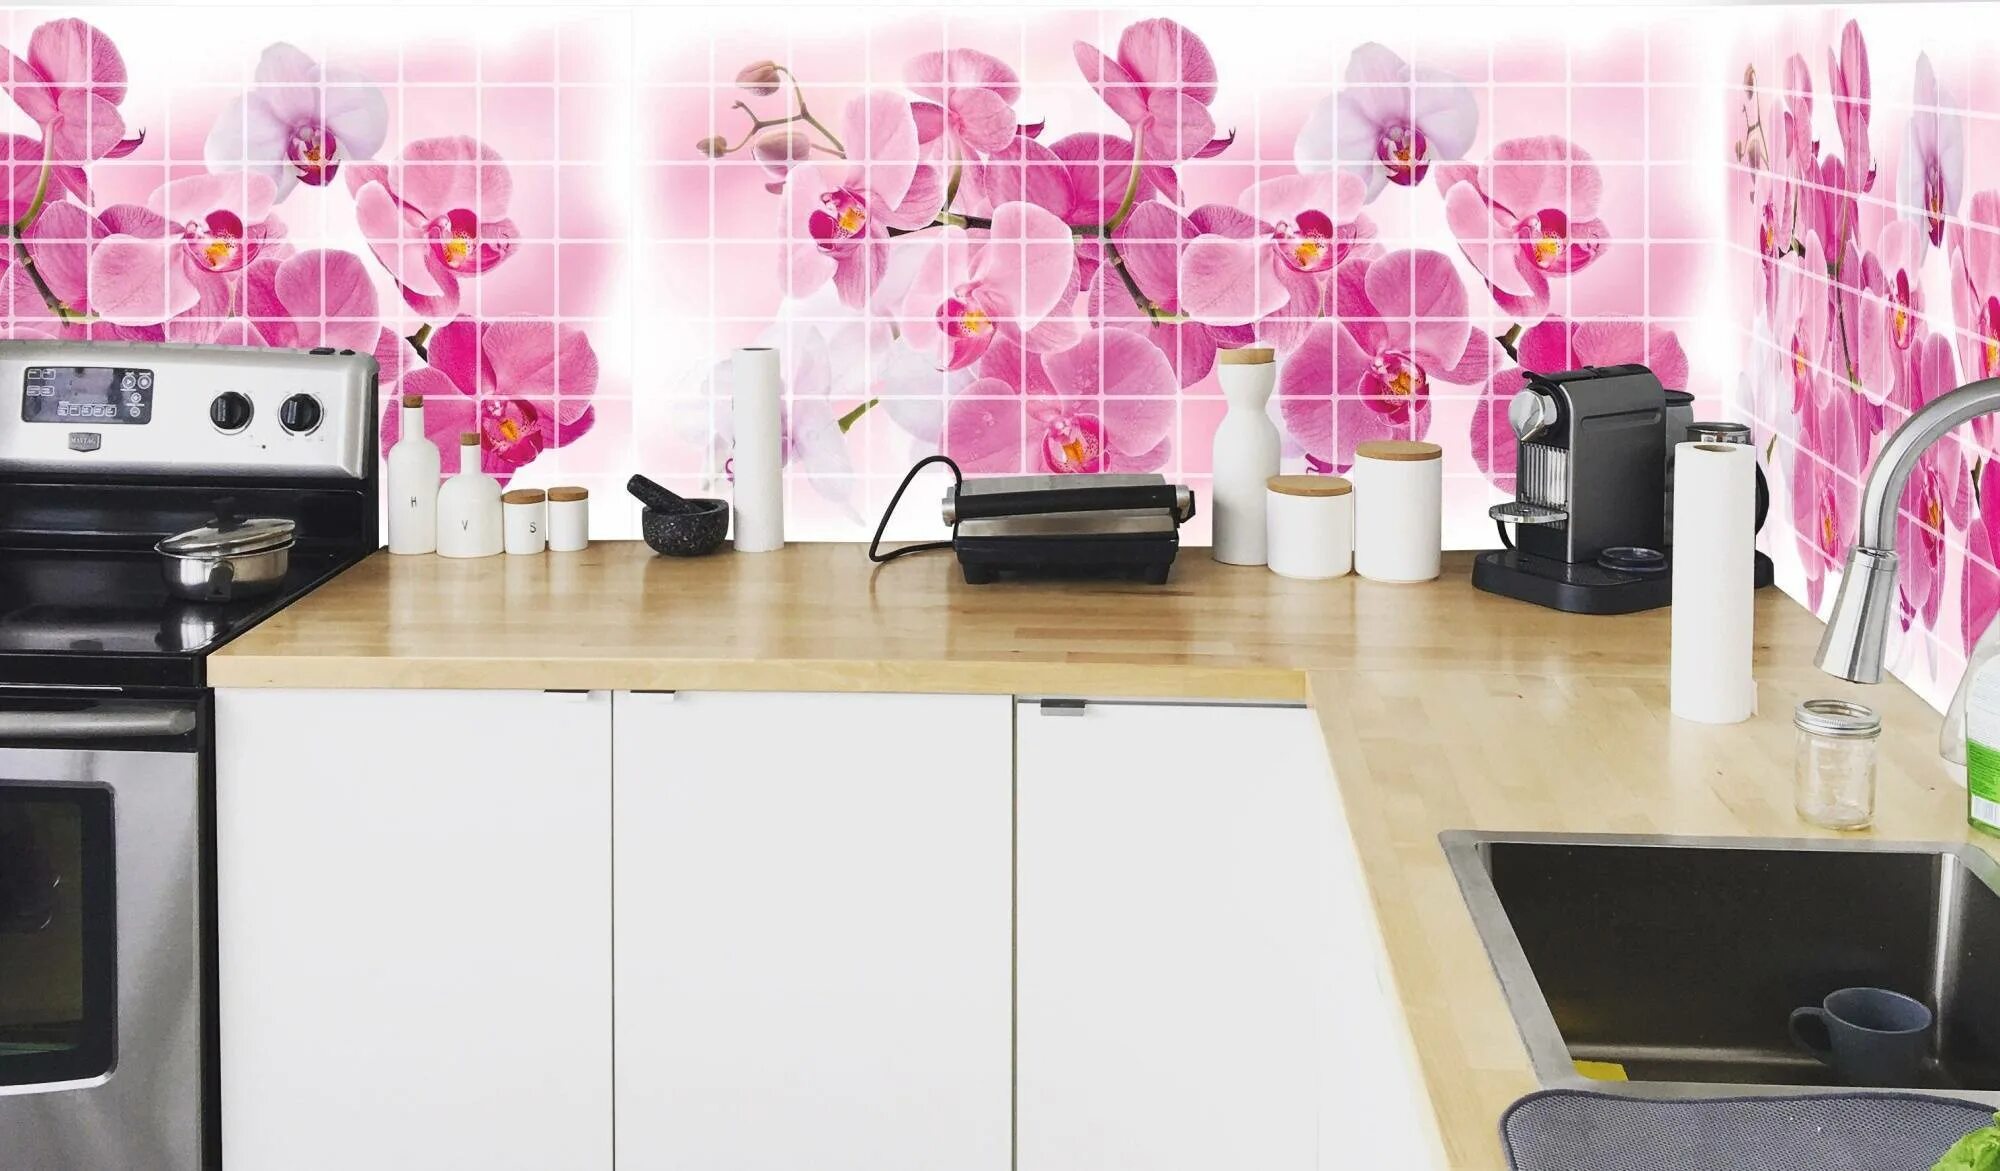 Панель ПВХ мозаика Орхидея Розея. Панель ПВХ мозаика Орхидея Розея 480*955*0,2мм. Пластиковые панели для кухни. Пластиковые стеновые панели для кухни. Панель пвх кухонный фартук